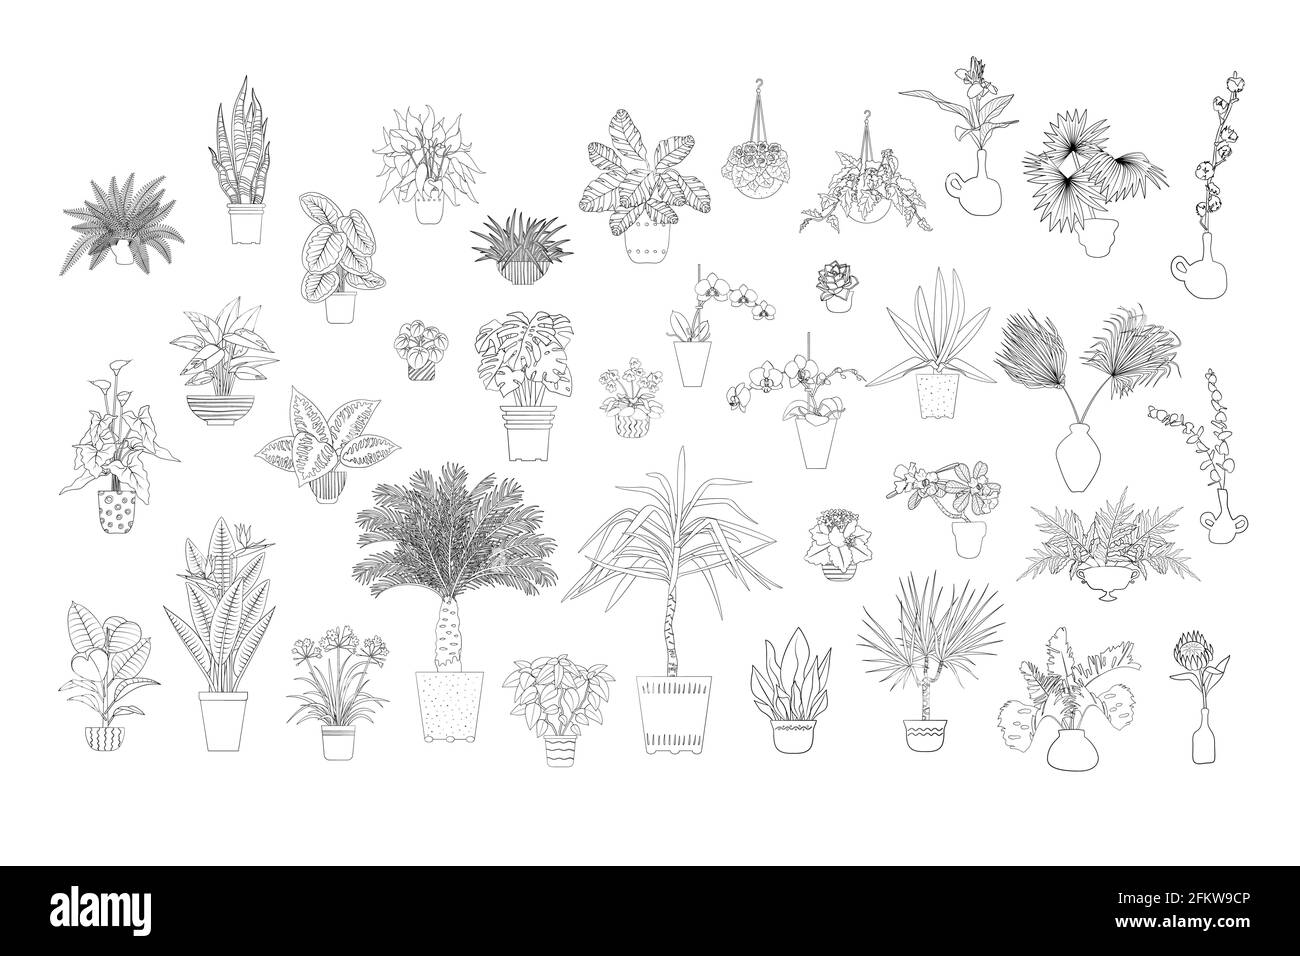 Set of various monochrome tropical house plants in planters. Black line art. Stock Vector